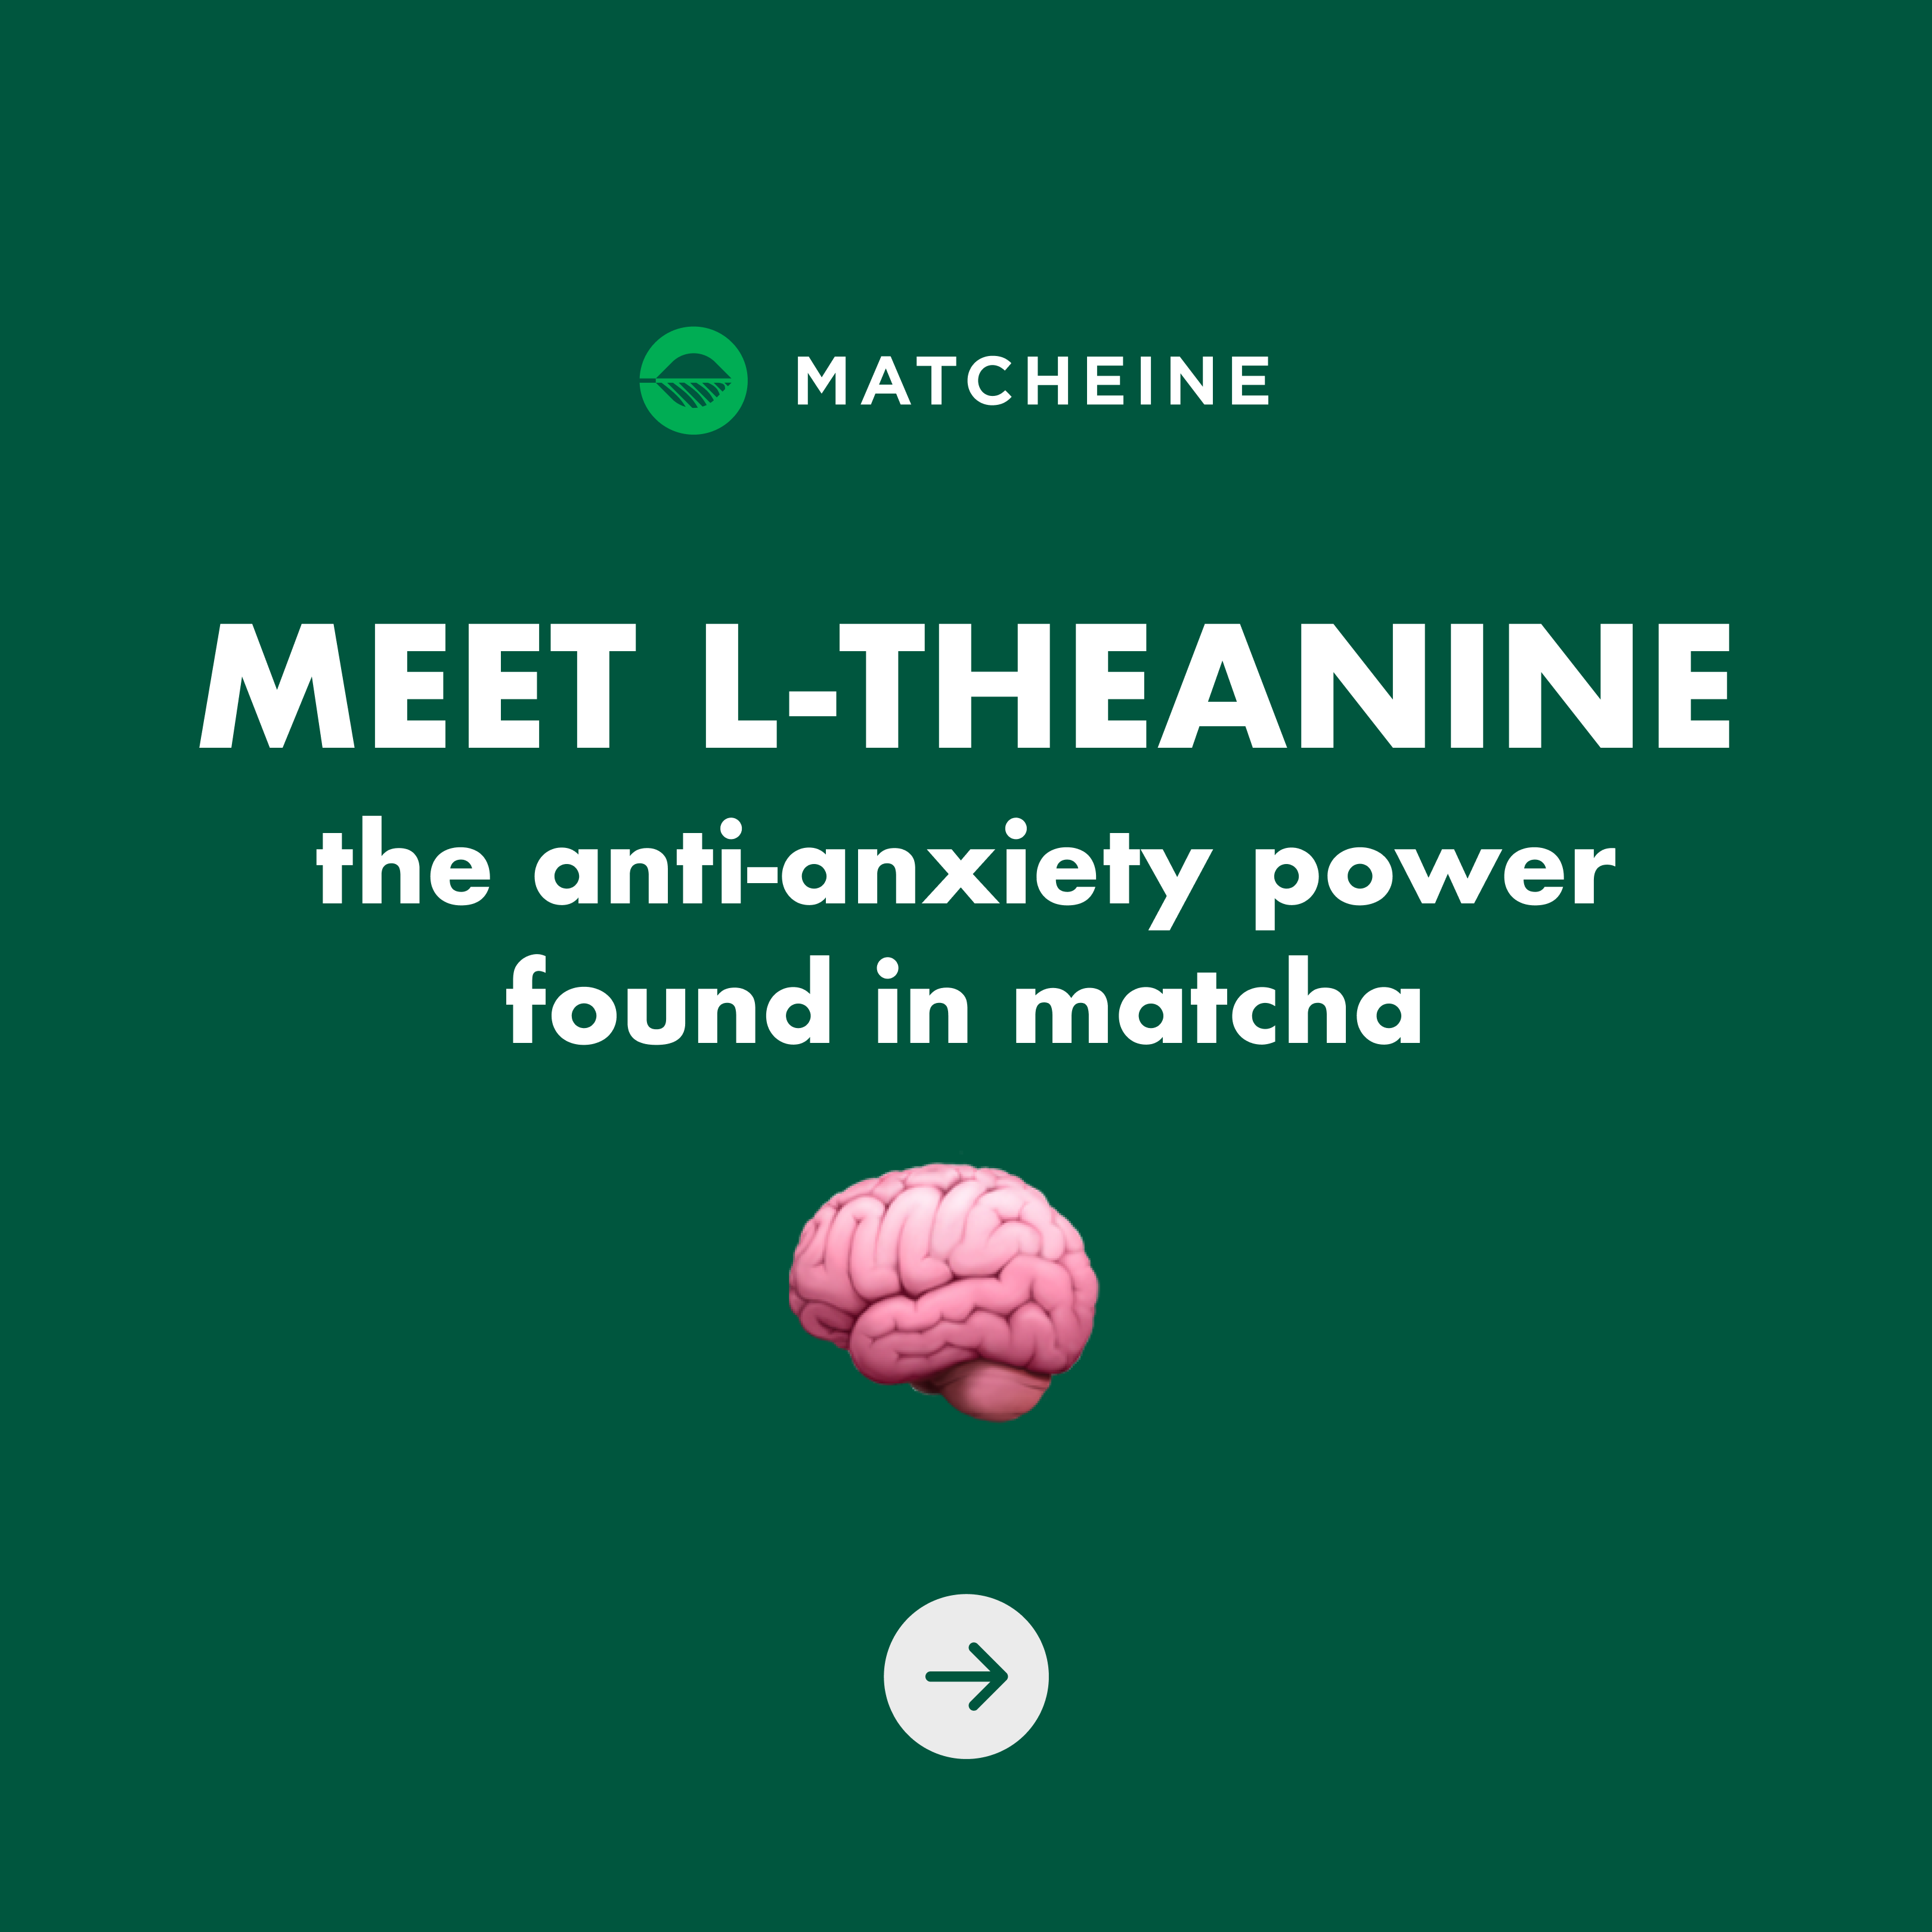 L-Theanine: The anti-anxiety power found in Matcheine